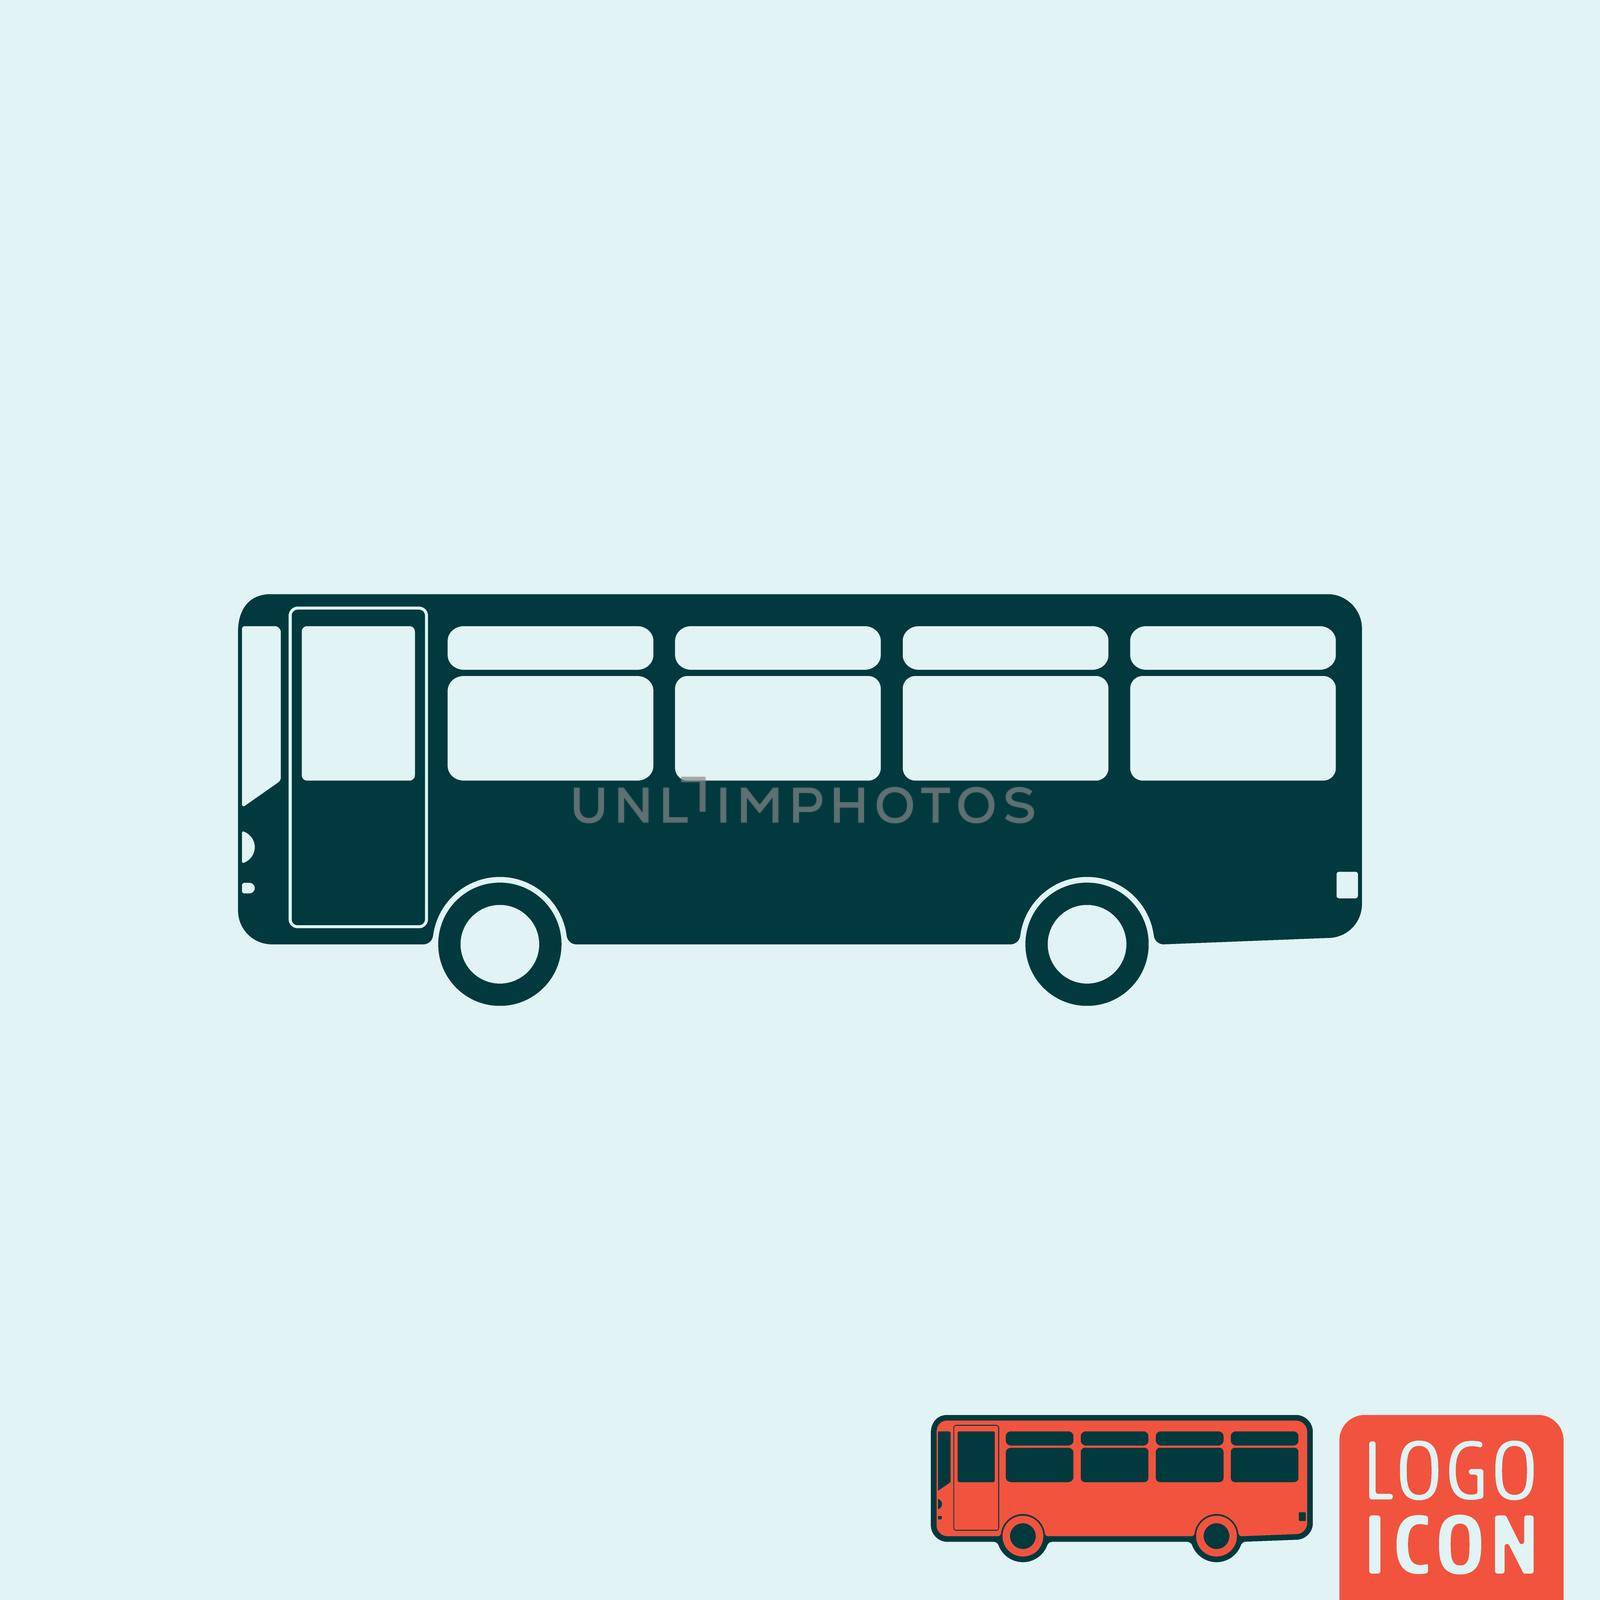 Bus icon. Bus logo. Bus symbol. Passenger bus icon isolated, minimal design. Vector illustration